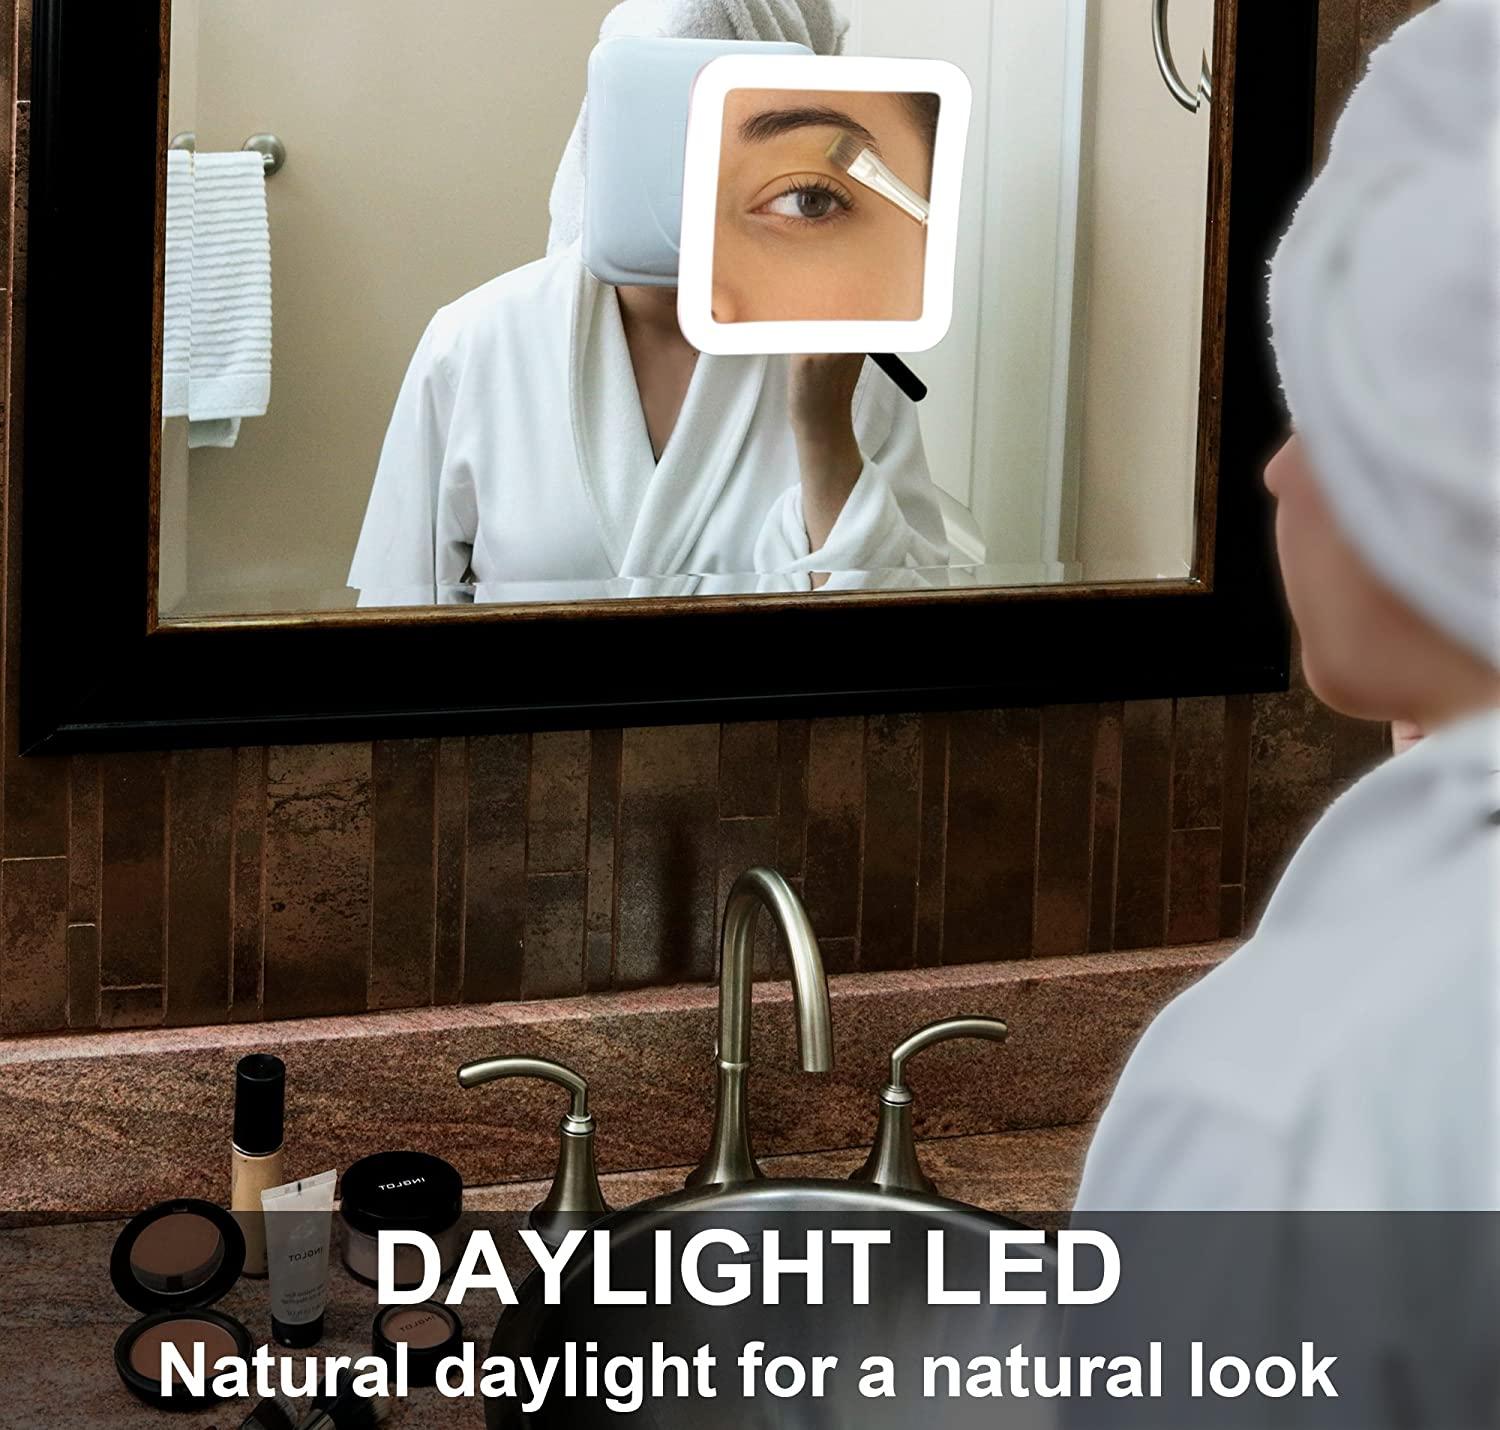 Fancii 10x Magnifying Lighted Makeup